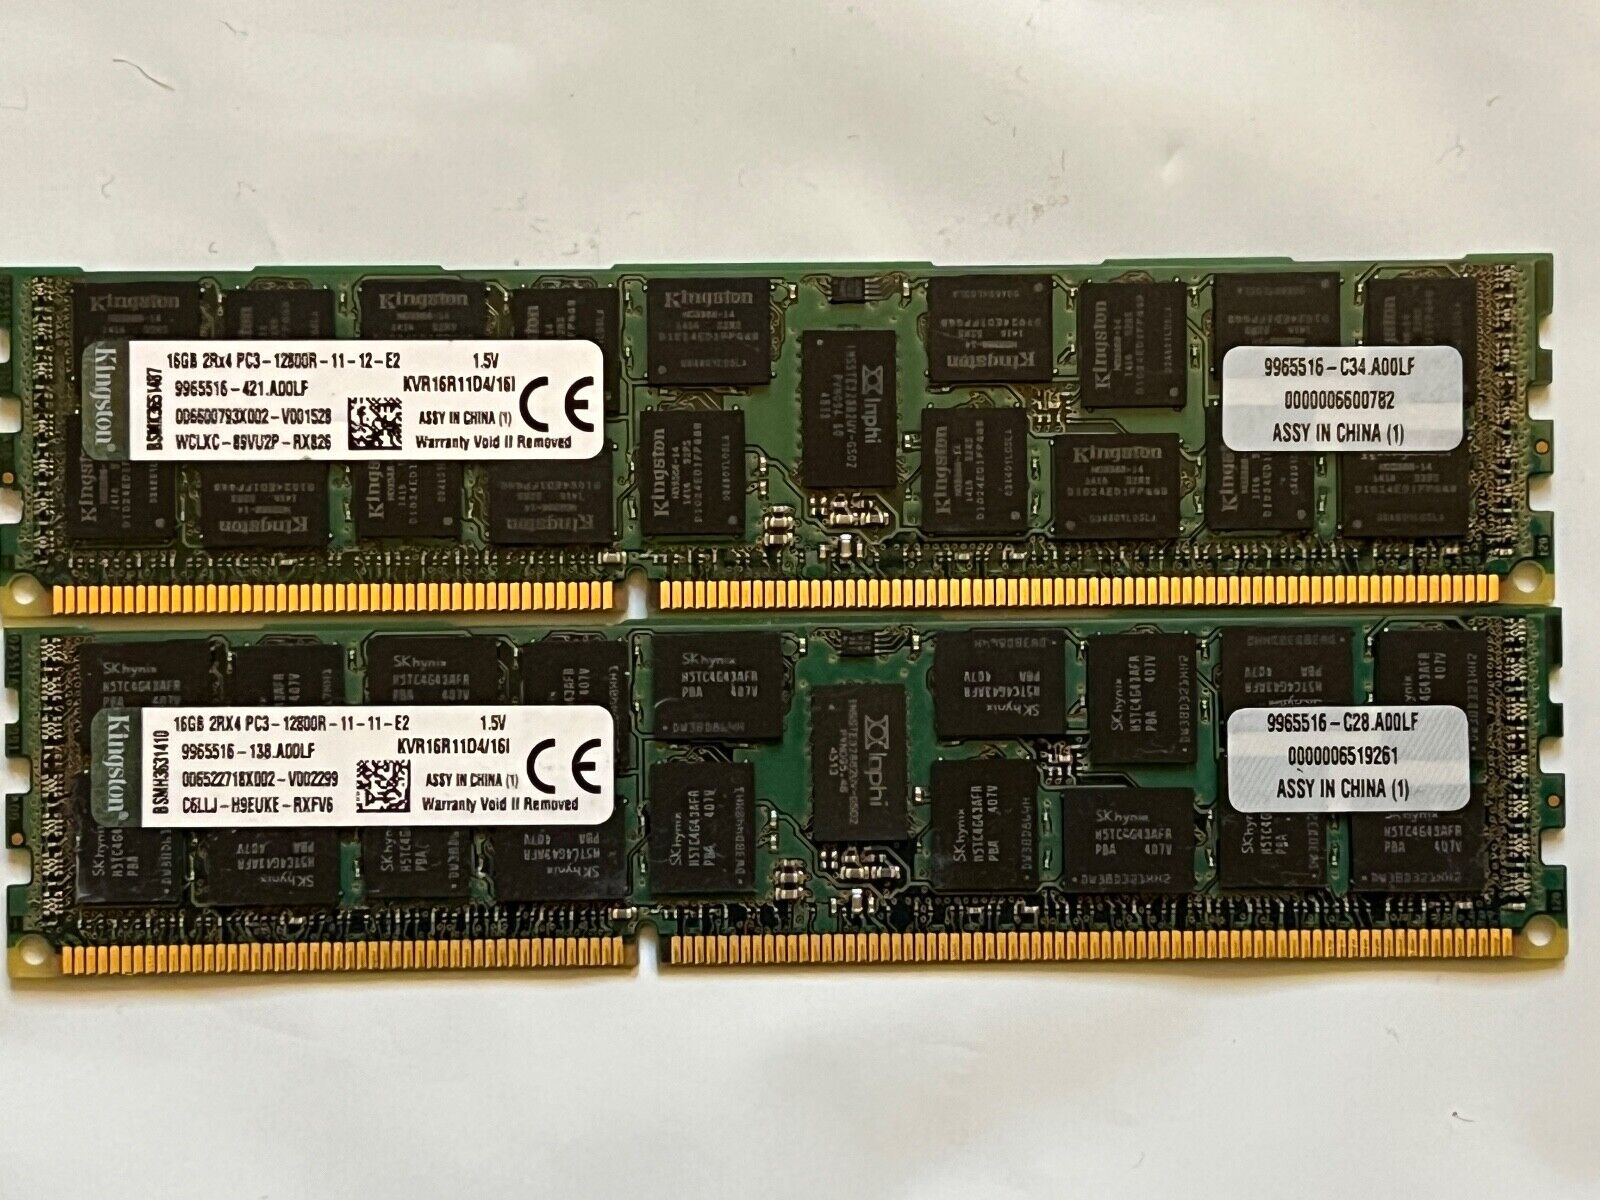 KINGSTON 32GB (2x16GB) PC3-12800R 1600MHz DDR3 ECC Registered Memory KVR16R11D4